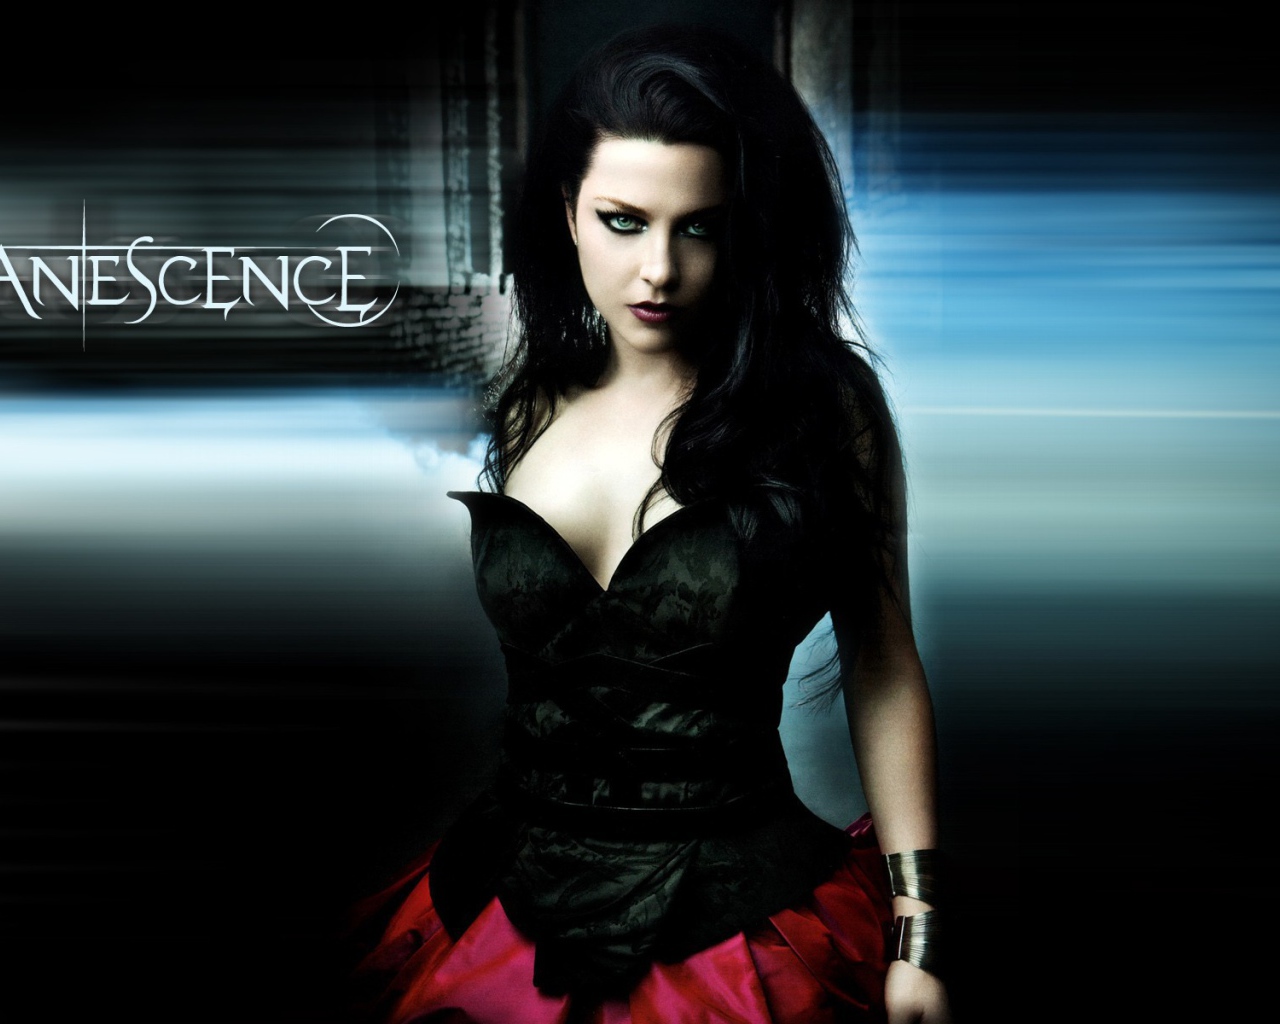 Певица из группы Evanescence